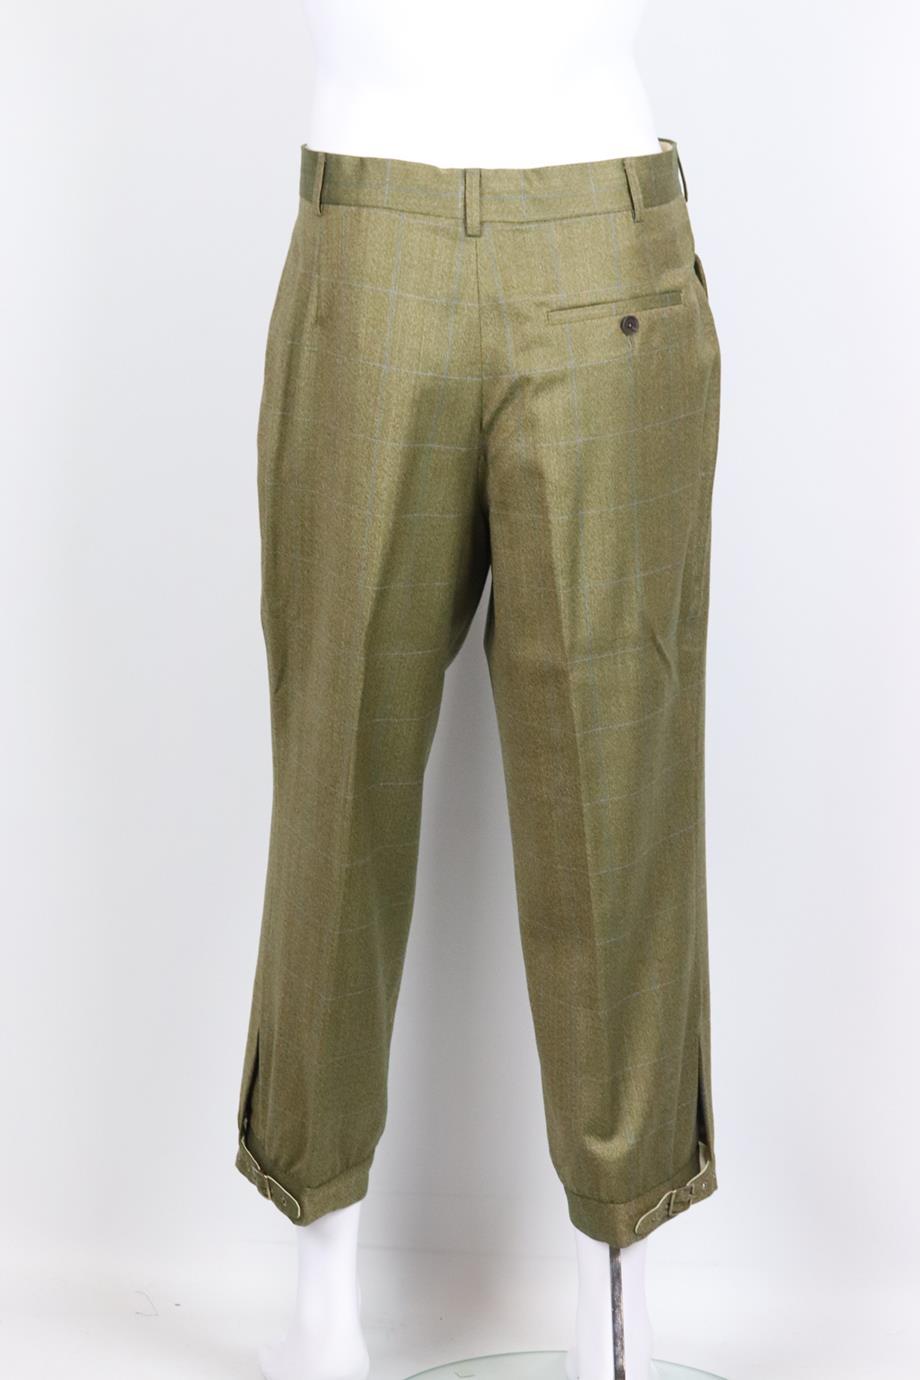 1800s mens pants